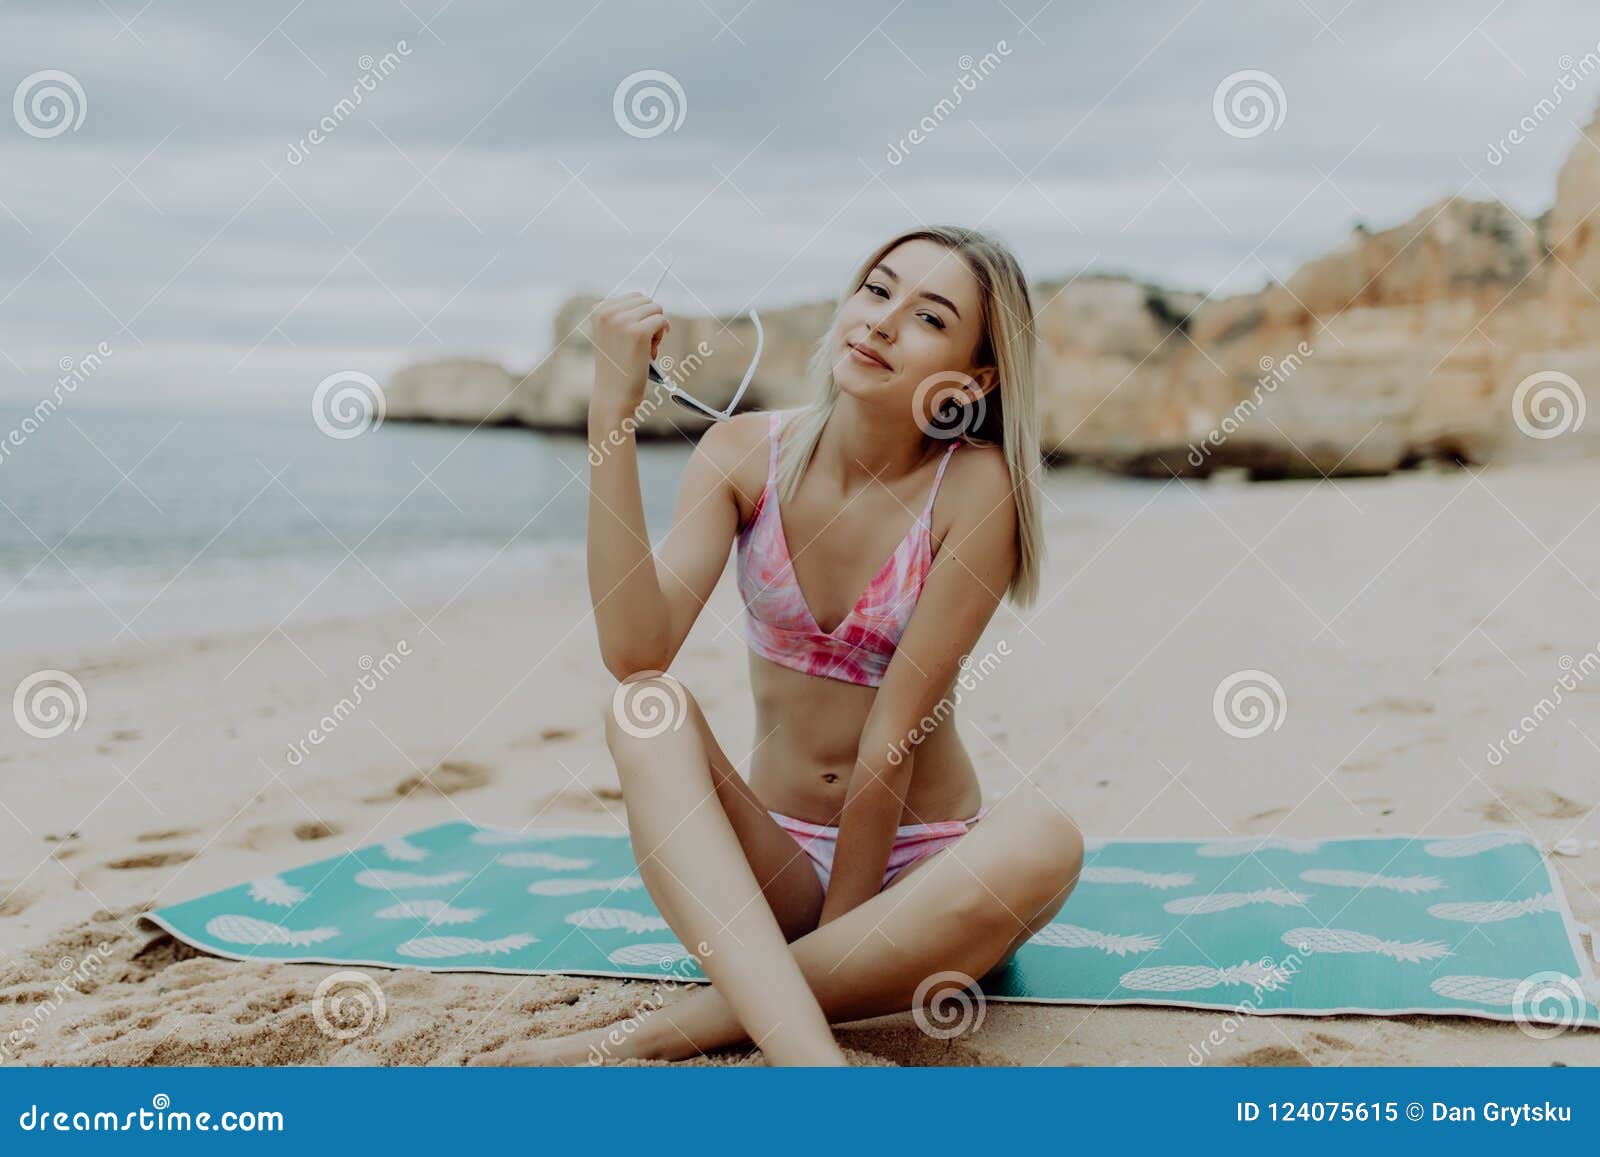 bondages girls blowjob dick on beach porn photo